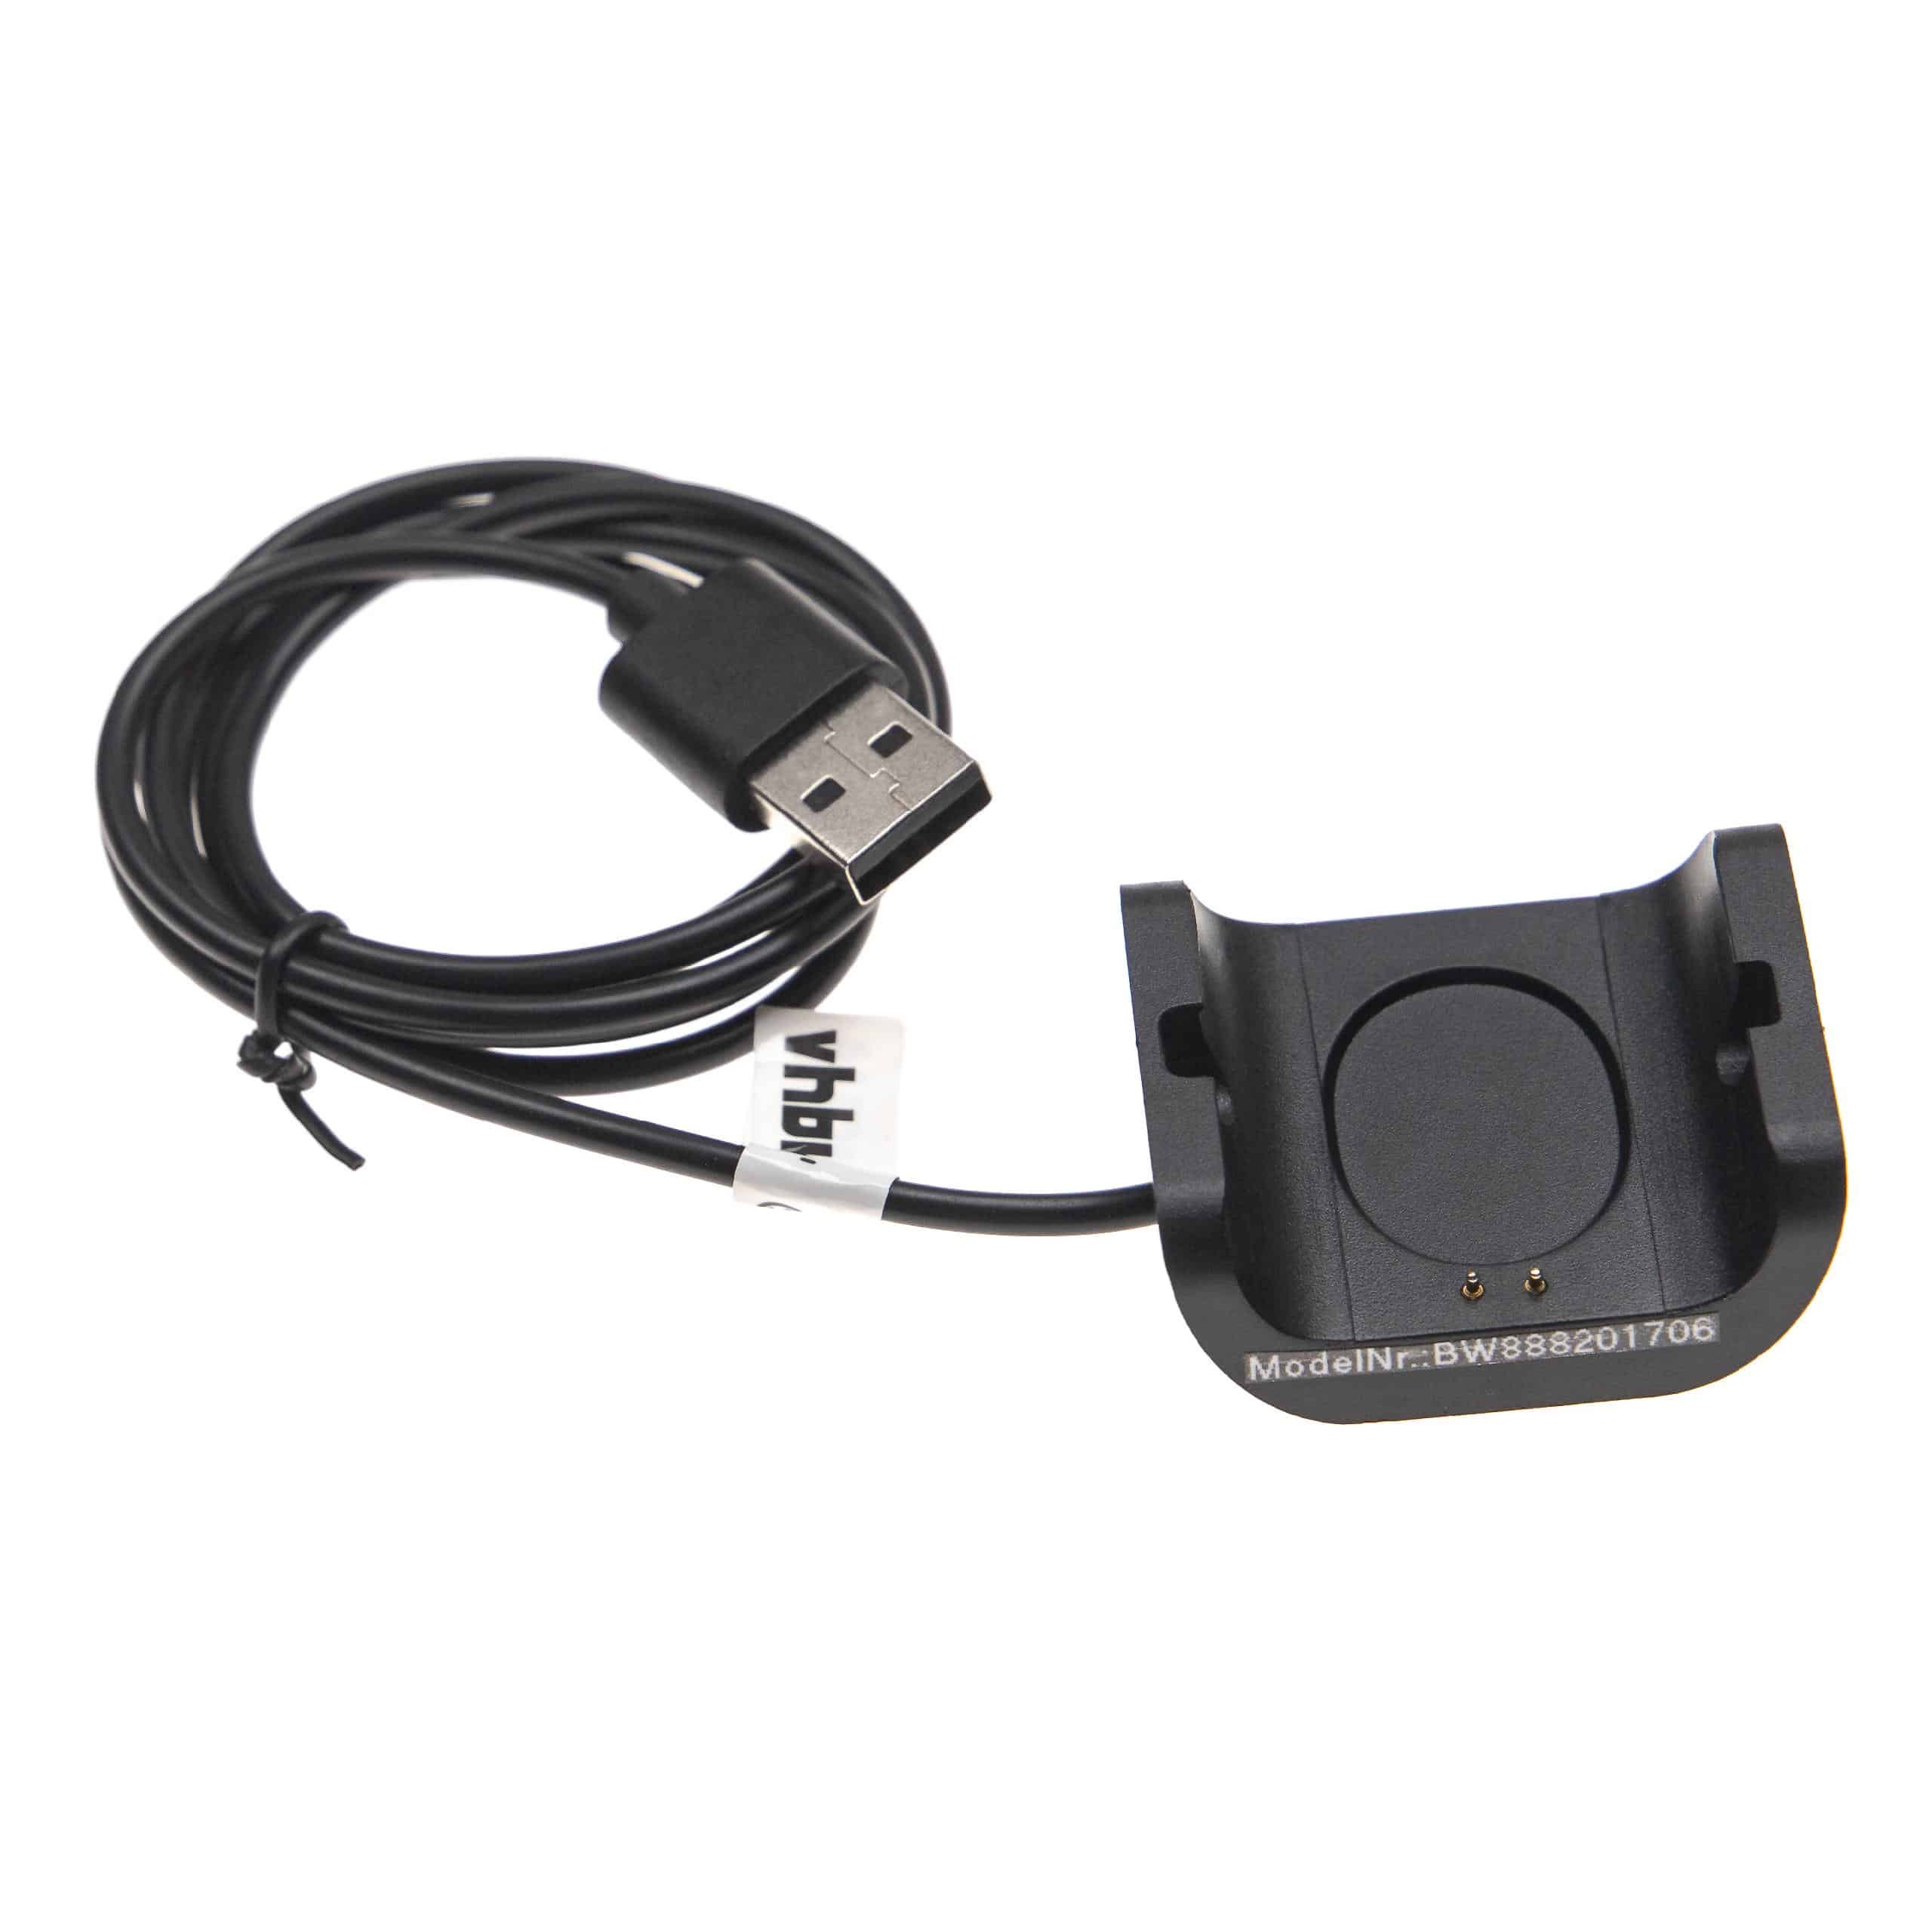 Cable de carga USB para smartwatch Huami Amazfit Bip S - negro 100 cm